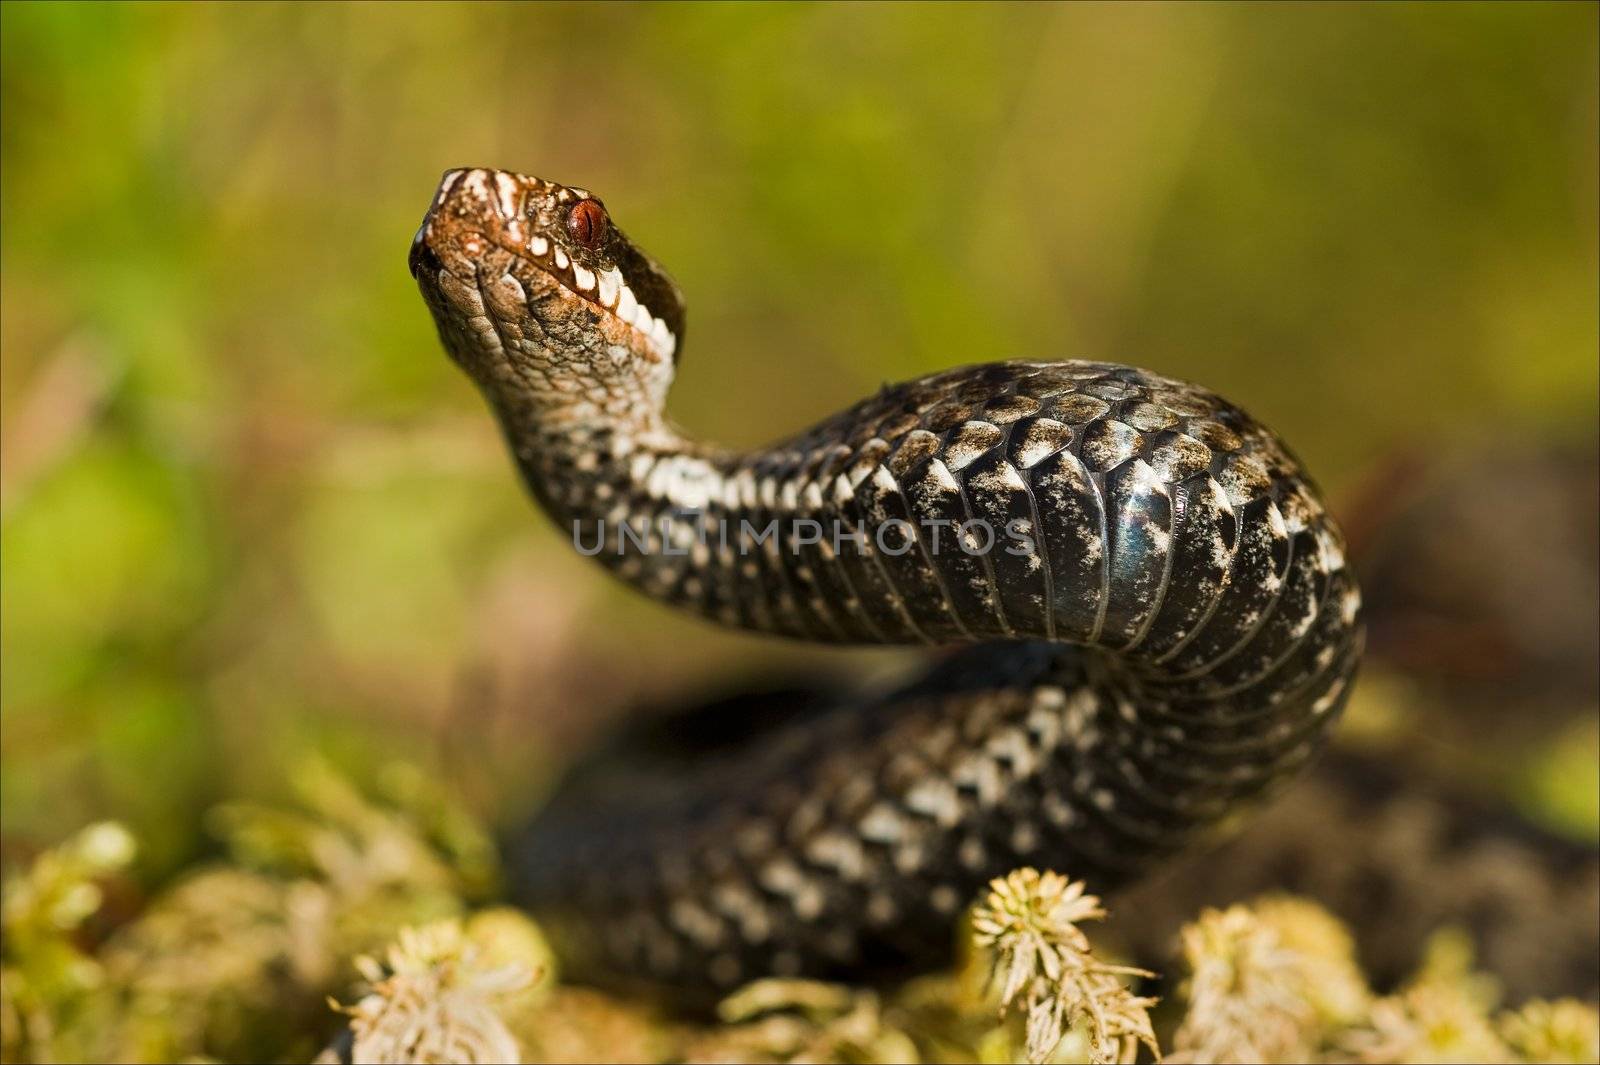 Snake in a menacing pose. by SURZ